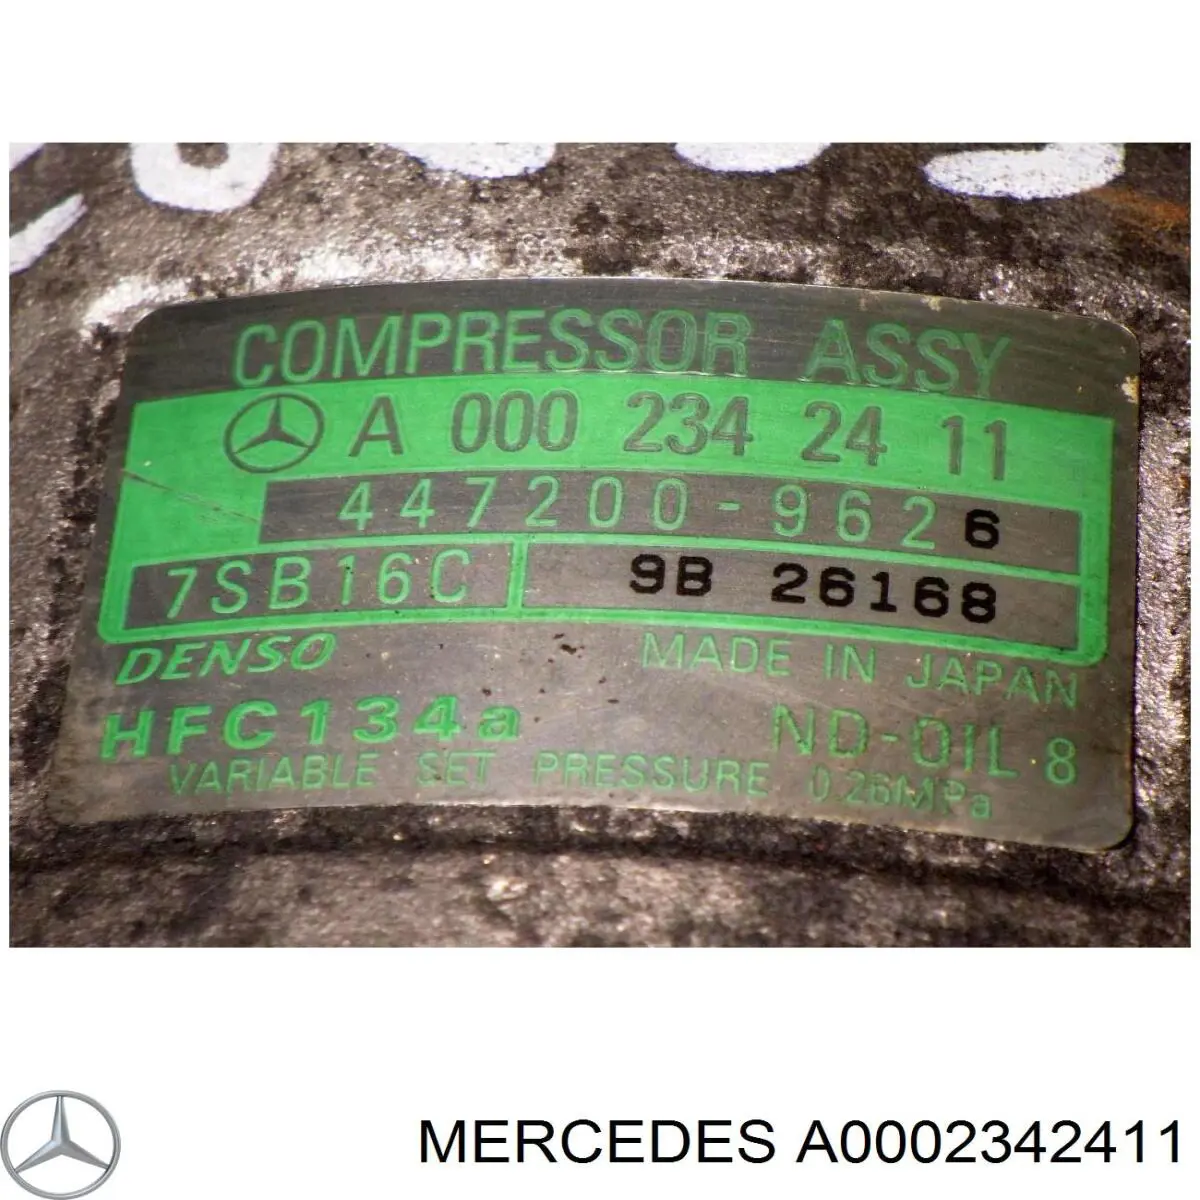 A0002342411 Mercedes compresor de aire acondicionado